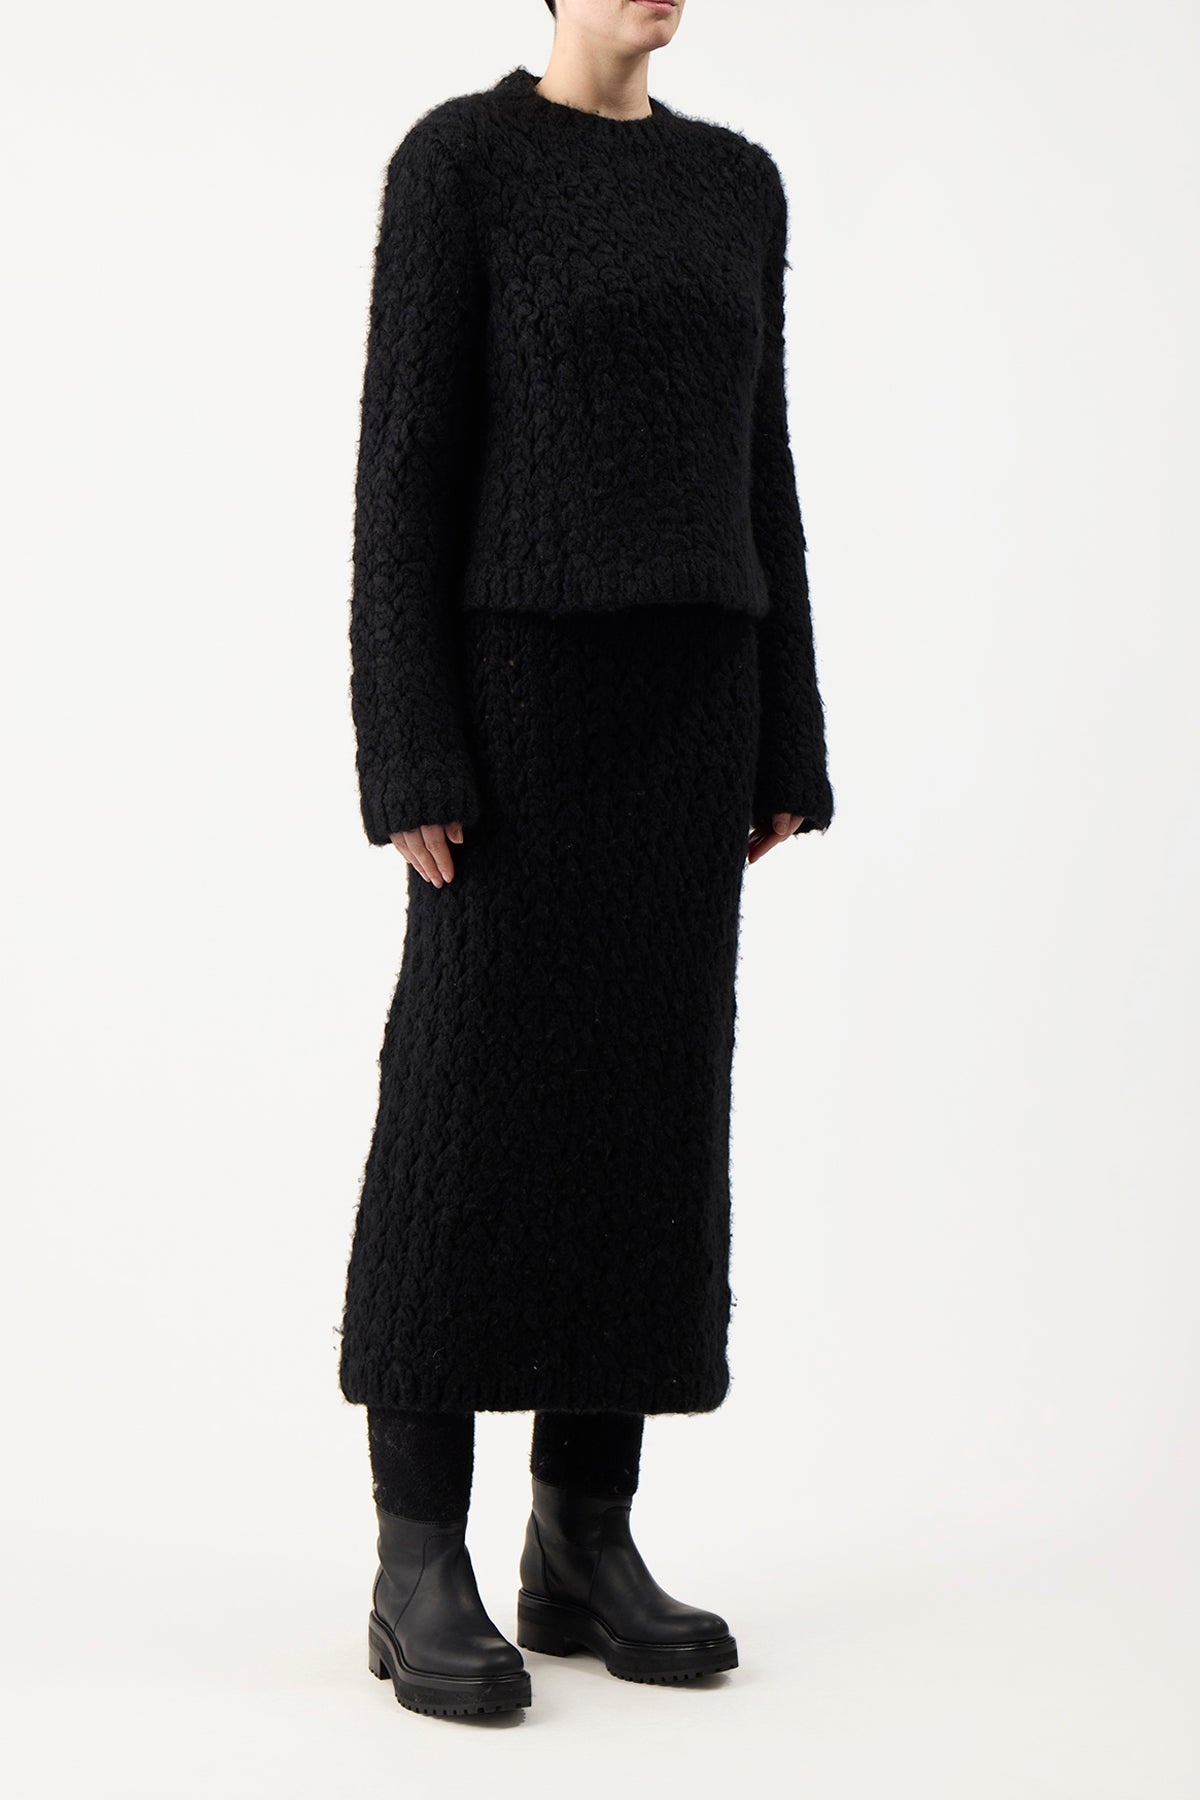 Collin Skirt in Black Welfat Cashmere - 3